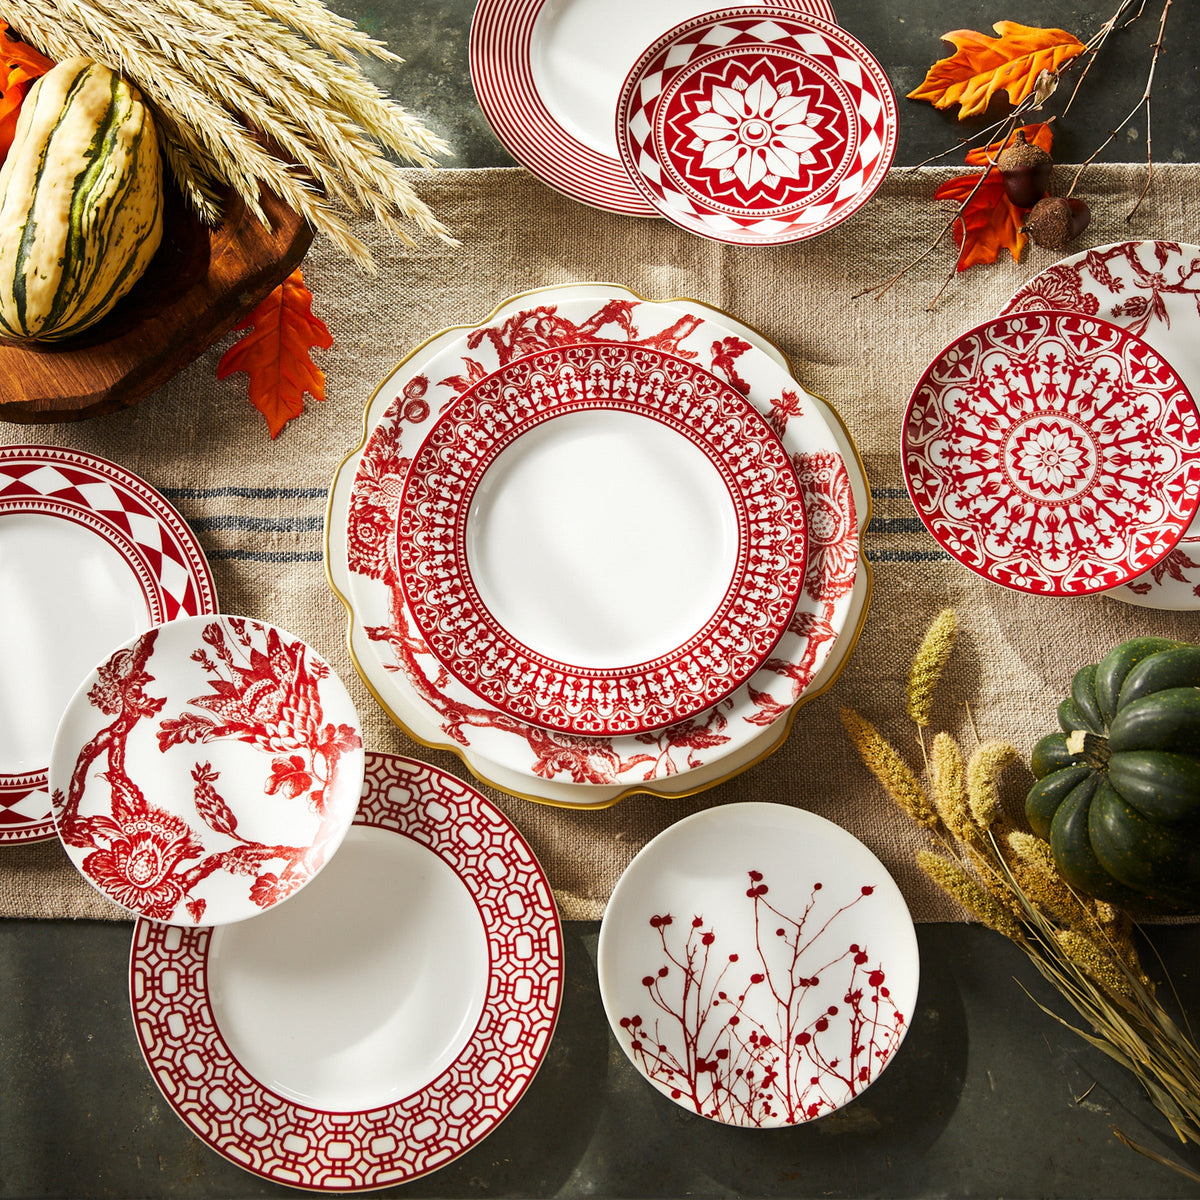 Caskata Artisanal Home&#39;s Newport Garden Gate Crimson Salad Plate, porcelain plates with crimson and white design, on a table during holidays.